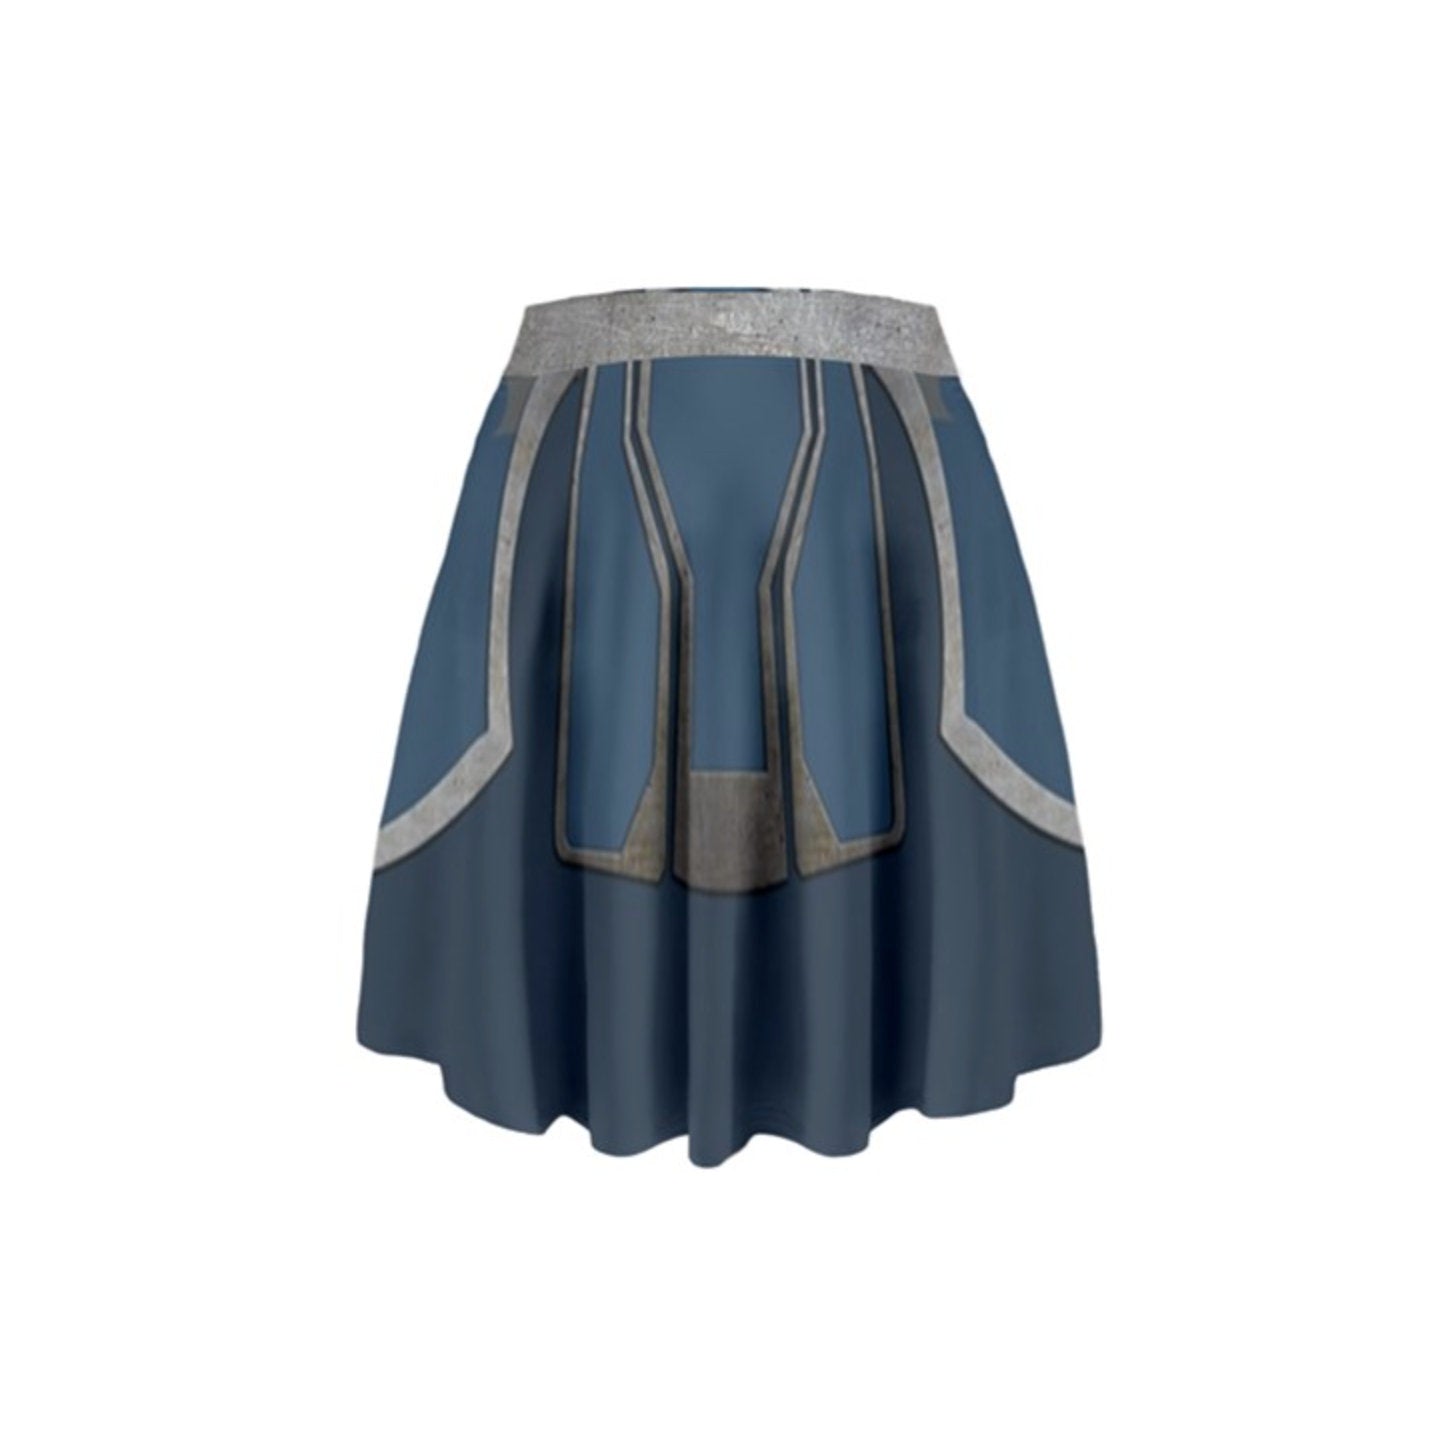 Mandalore Ahsoka Tano Star Wars Inspired High Waisted Skirt